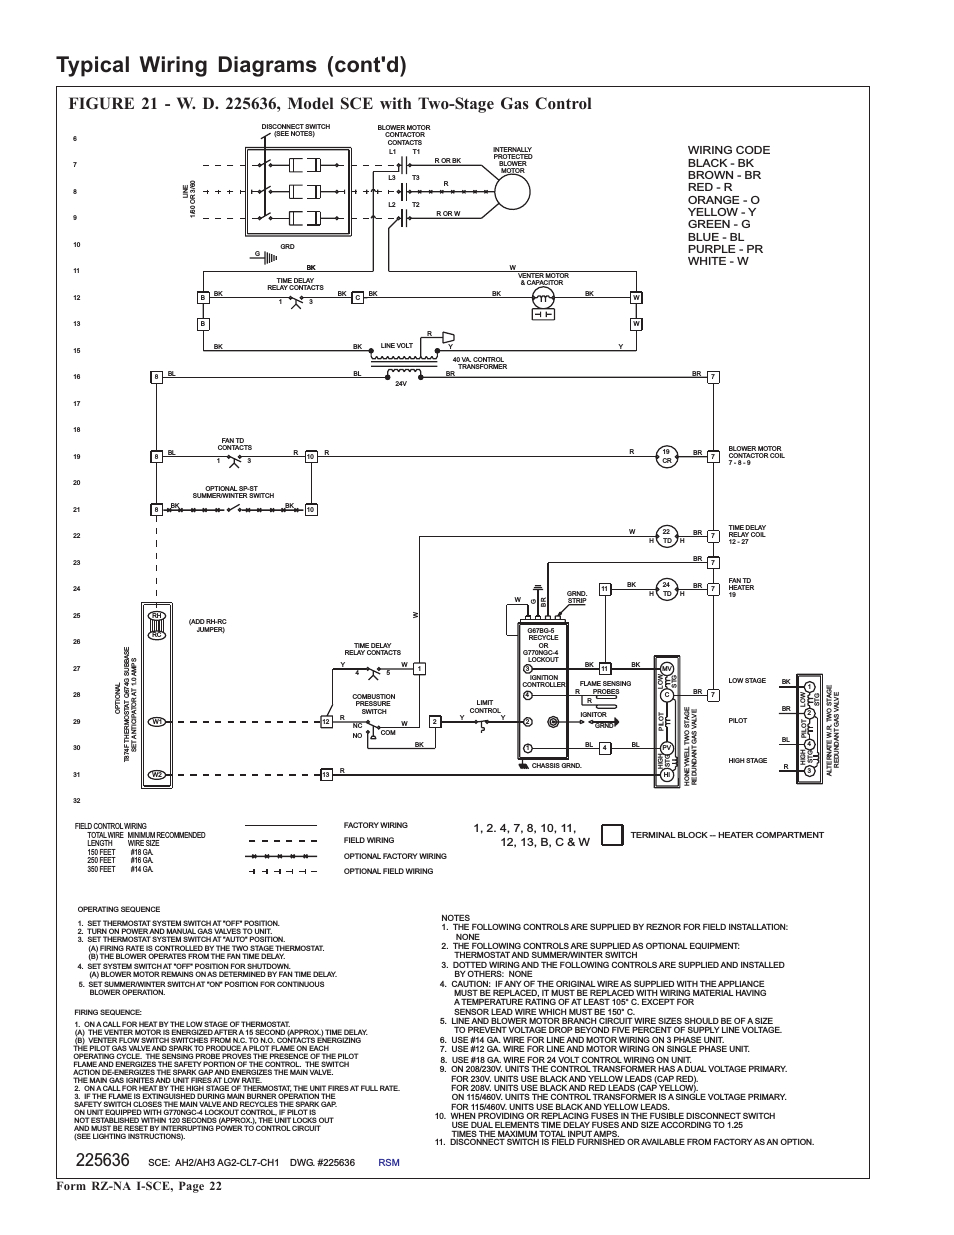 Reznor Heater Wiring Diagram - Wiring Diagram Blog - Reznor Heater Wiring Diagram